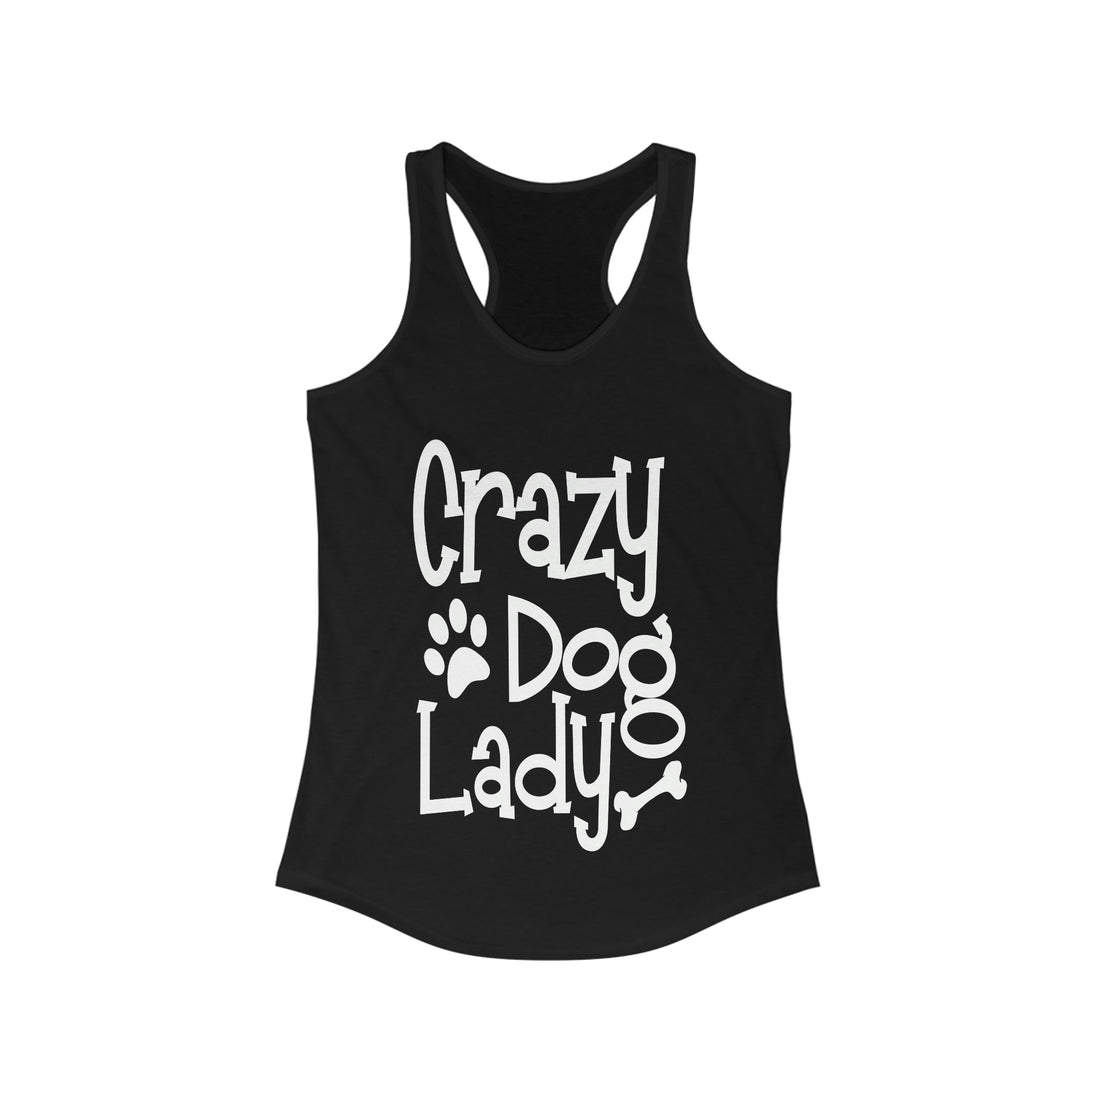 Crazy Dog Lady - Racerback Tank Top